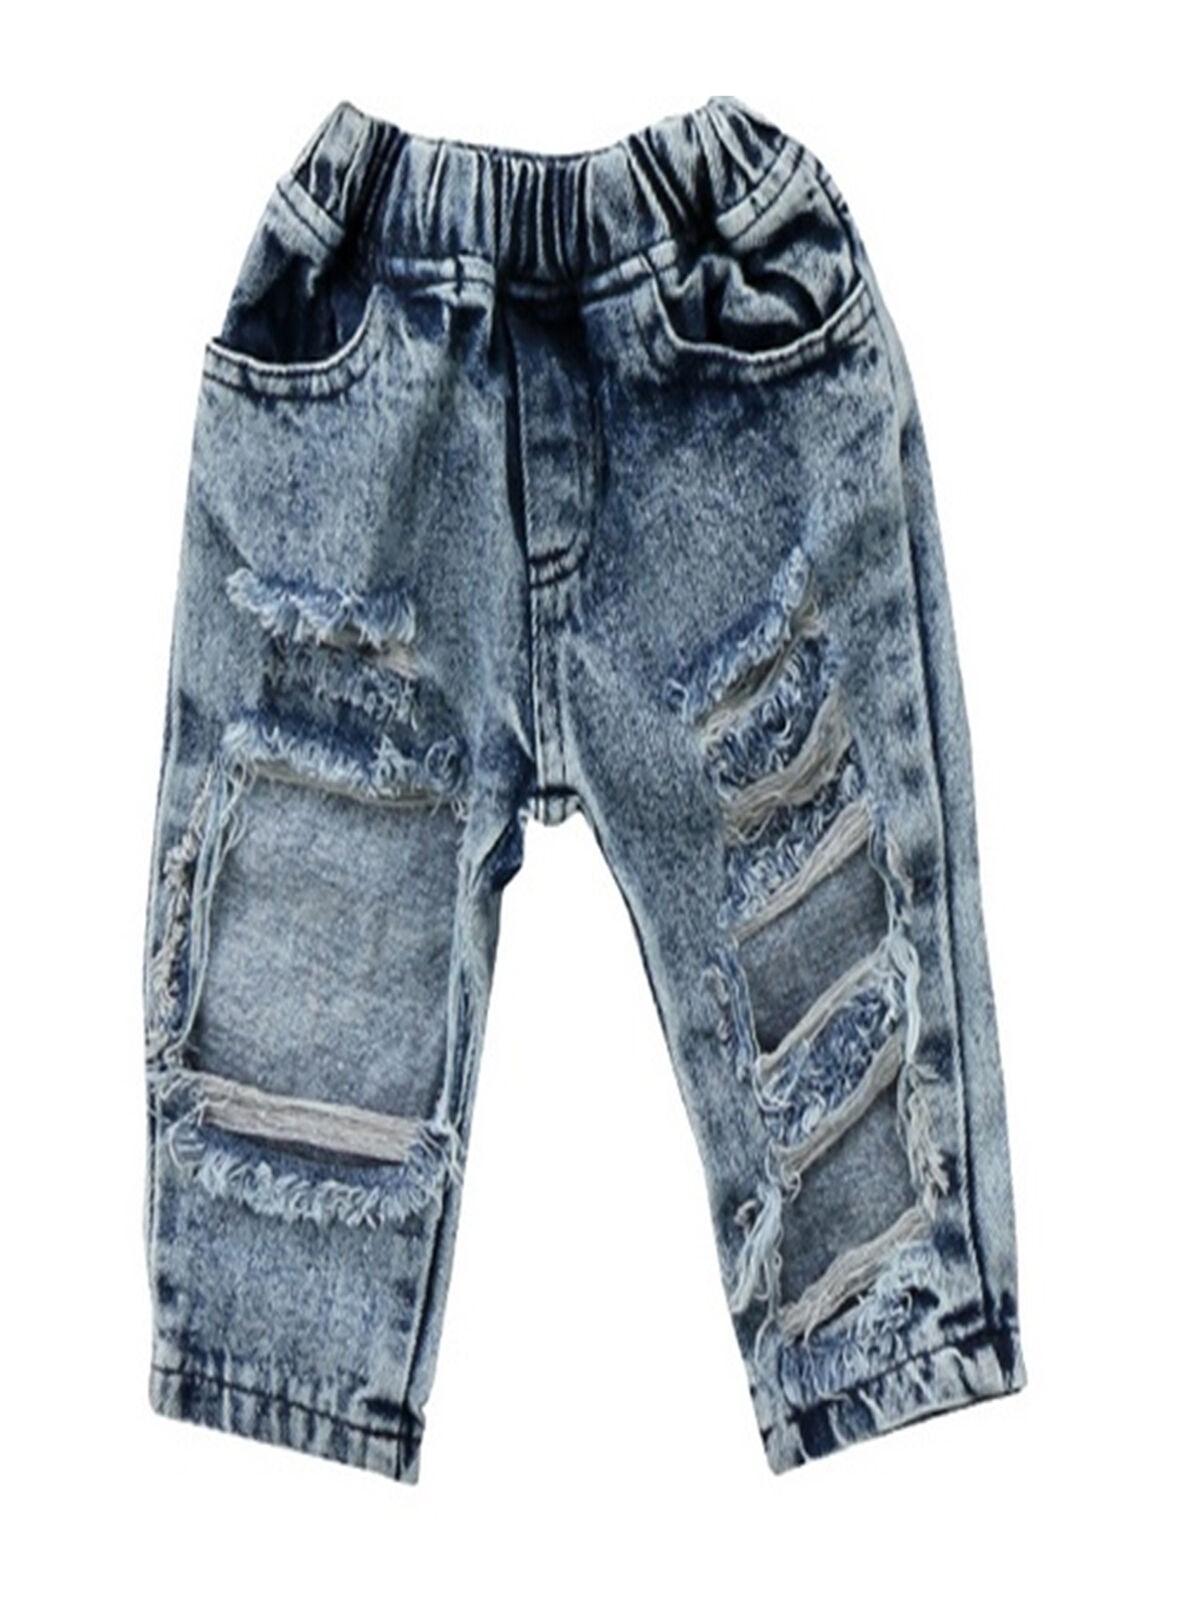 MANGCHI-Kids Little Boys/Girls Broken Holes Elastic Waist Ripped Denim Jeans Destroyed Kids Basic Pants 